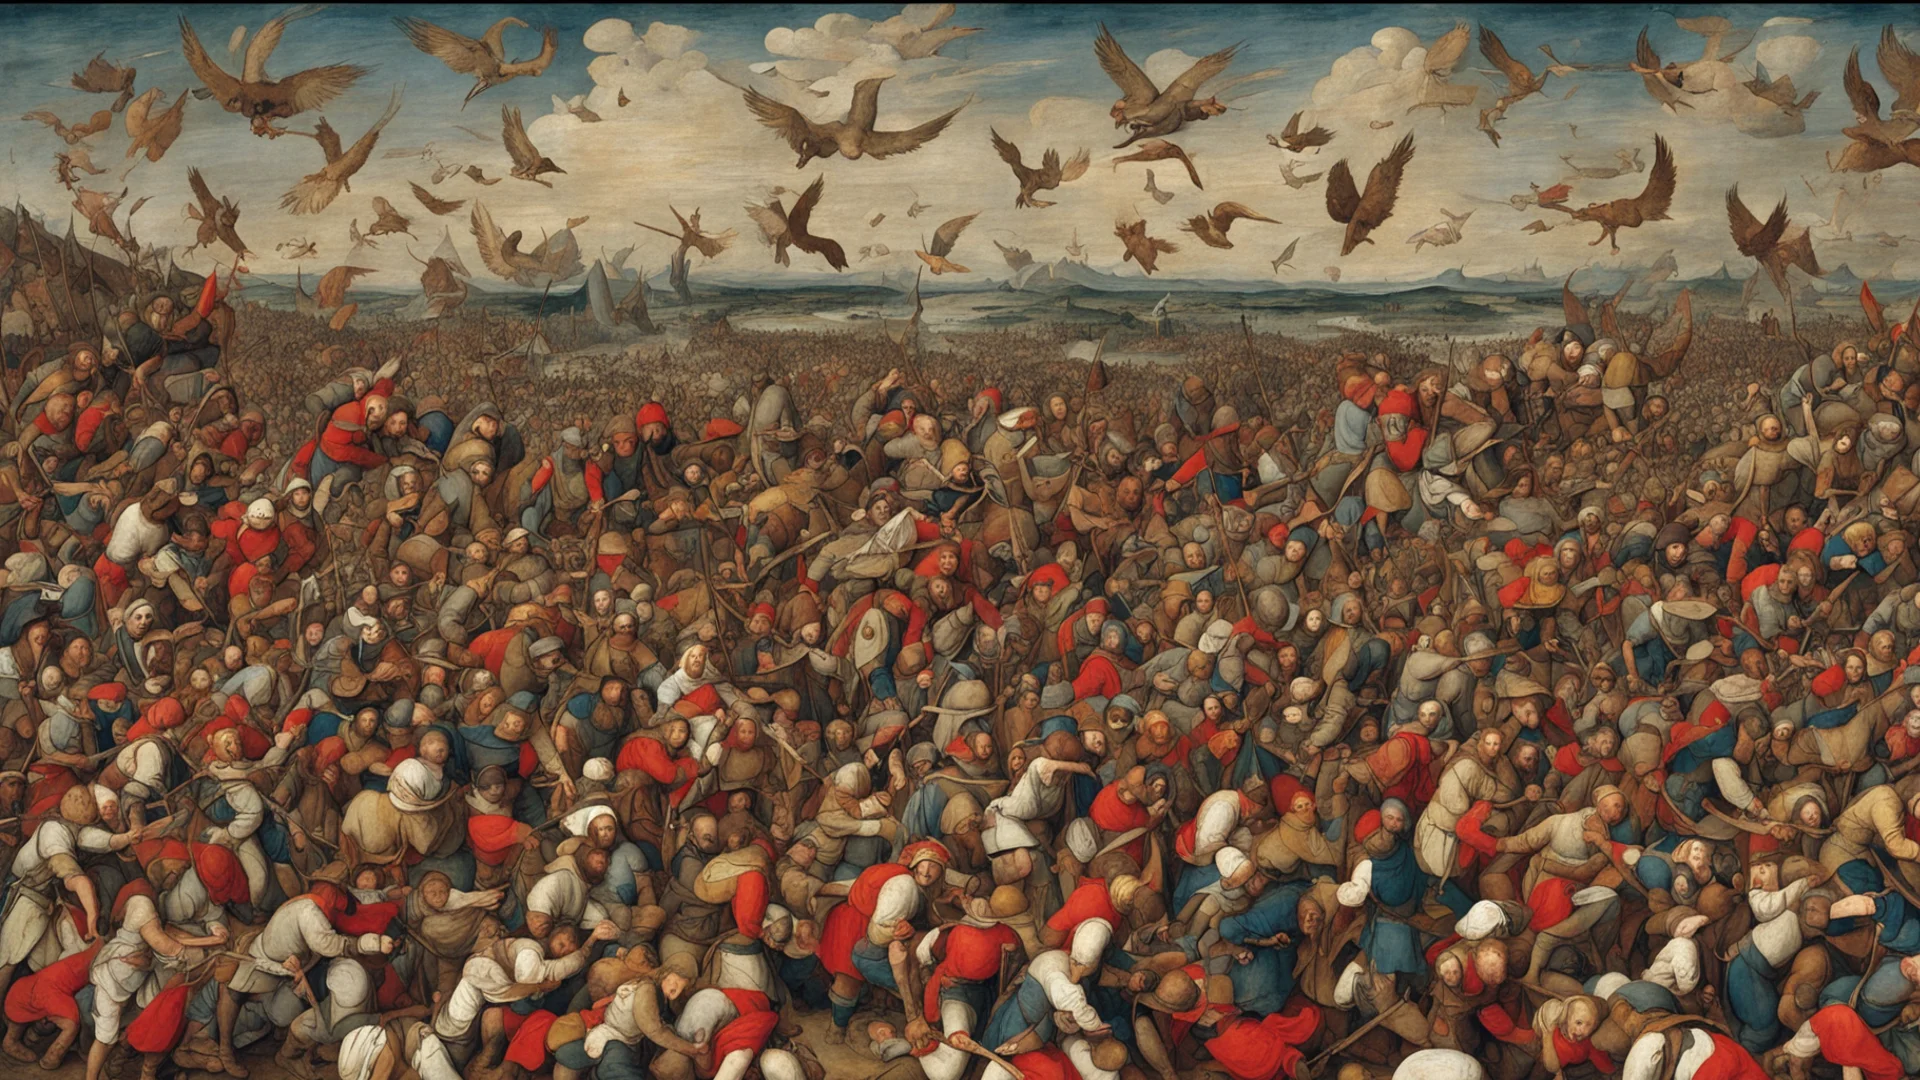 war in heaven painted by pieter bruegel ar 169 amazing awesome portrait 2 wide